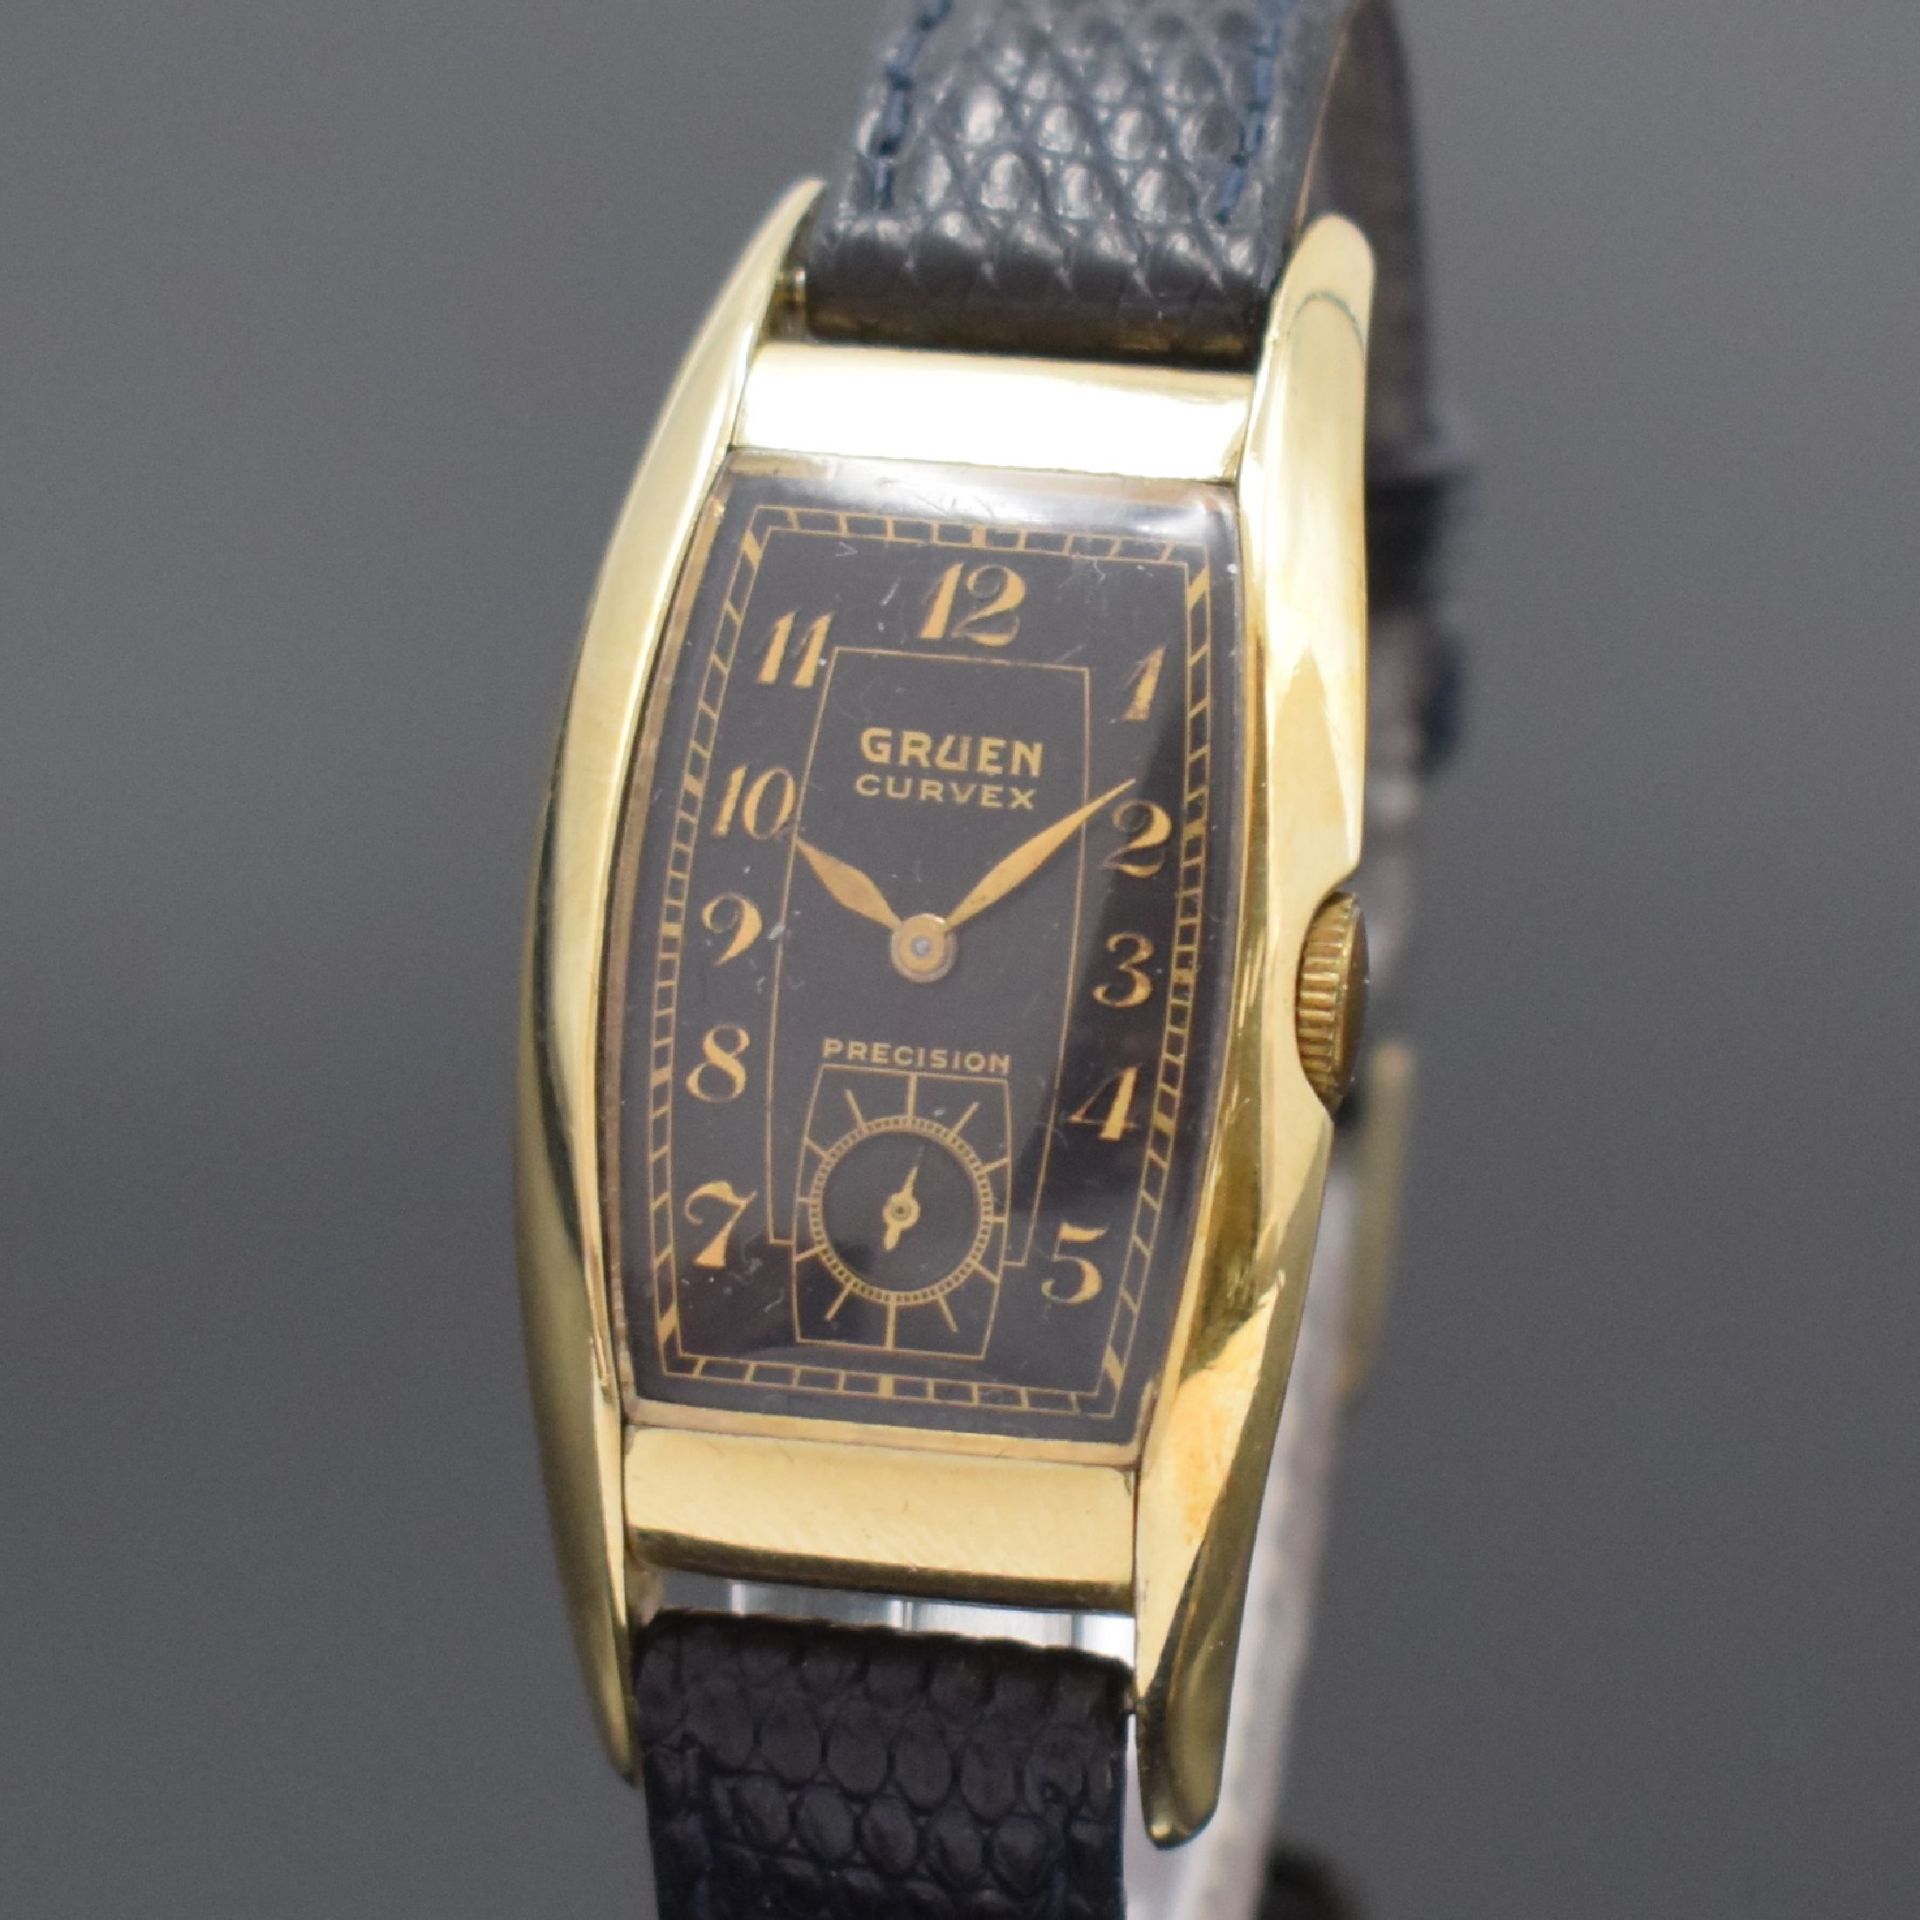 GRUEN Curvex Precision rechteckige Armbanduhr Referenz 311 - Image 2 of 6